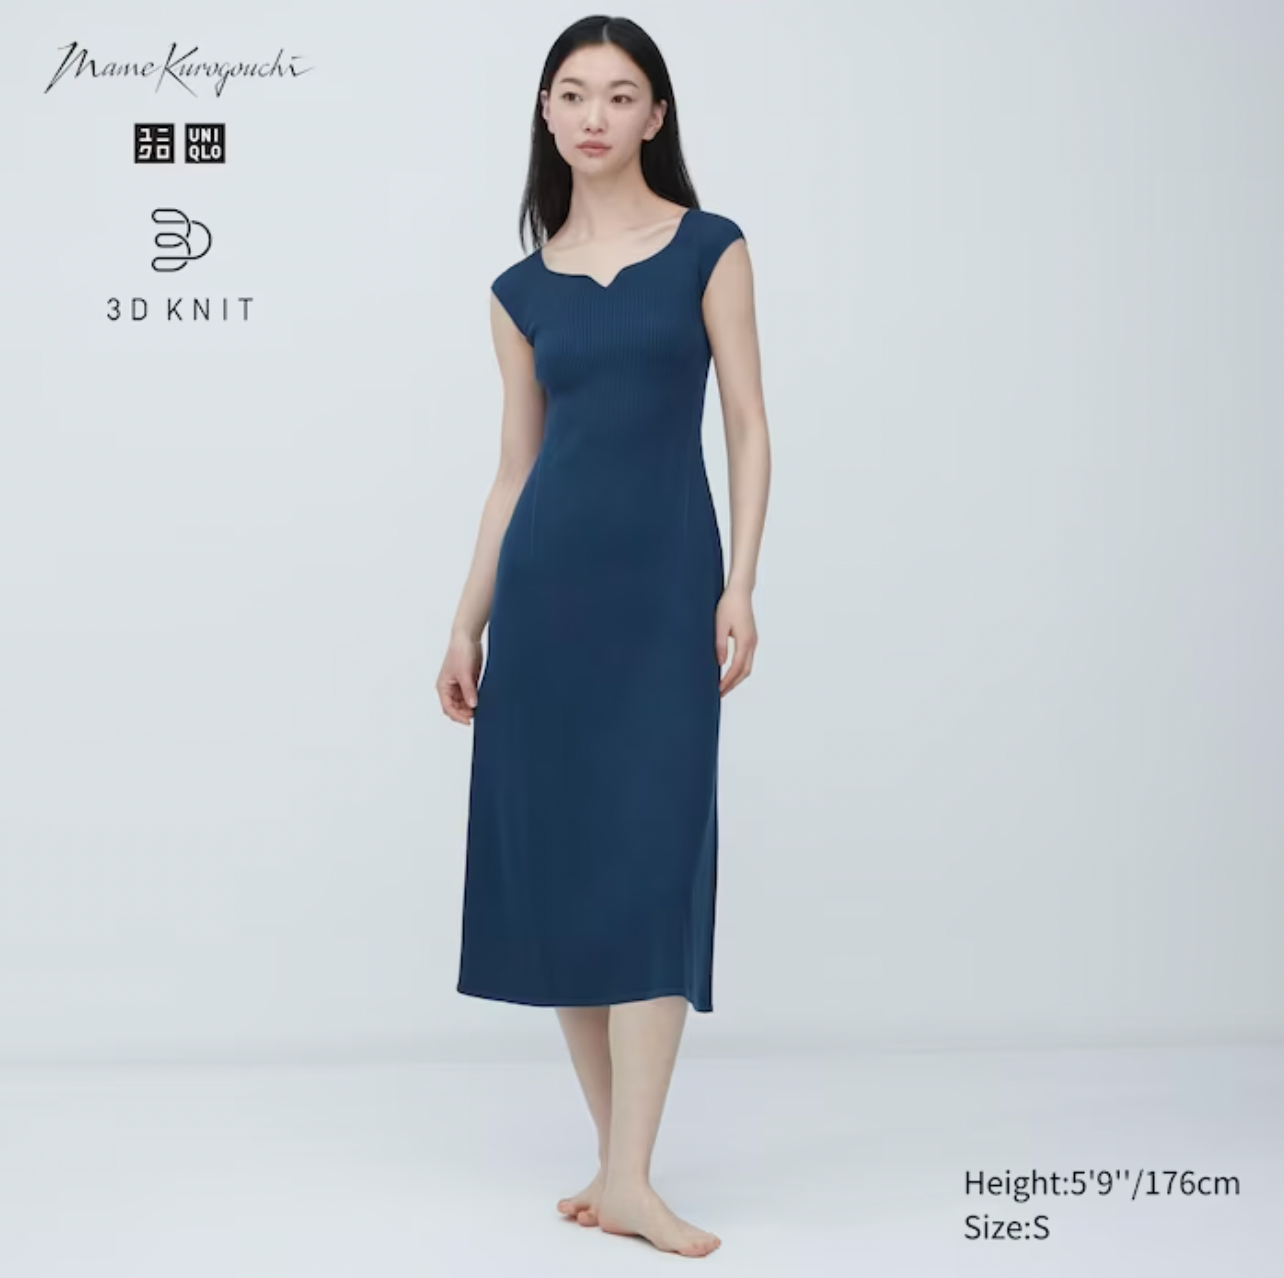 Uniqlo x Mame Kurogouchi + 3D Knit Sleeveless Dress (Mame Kurogouchi)